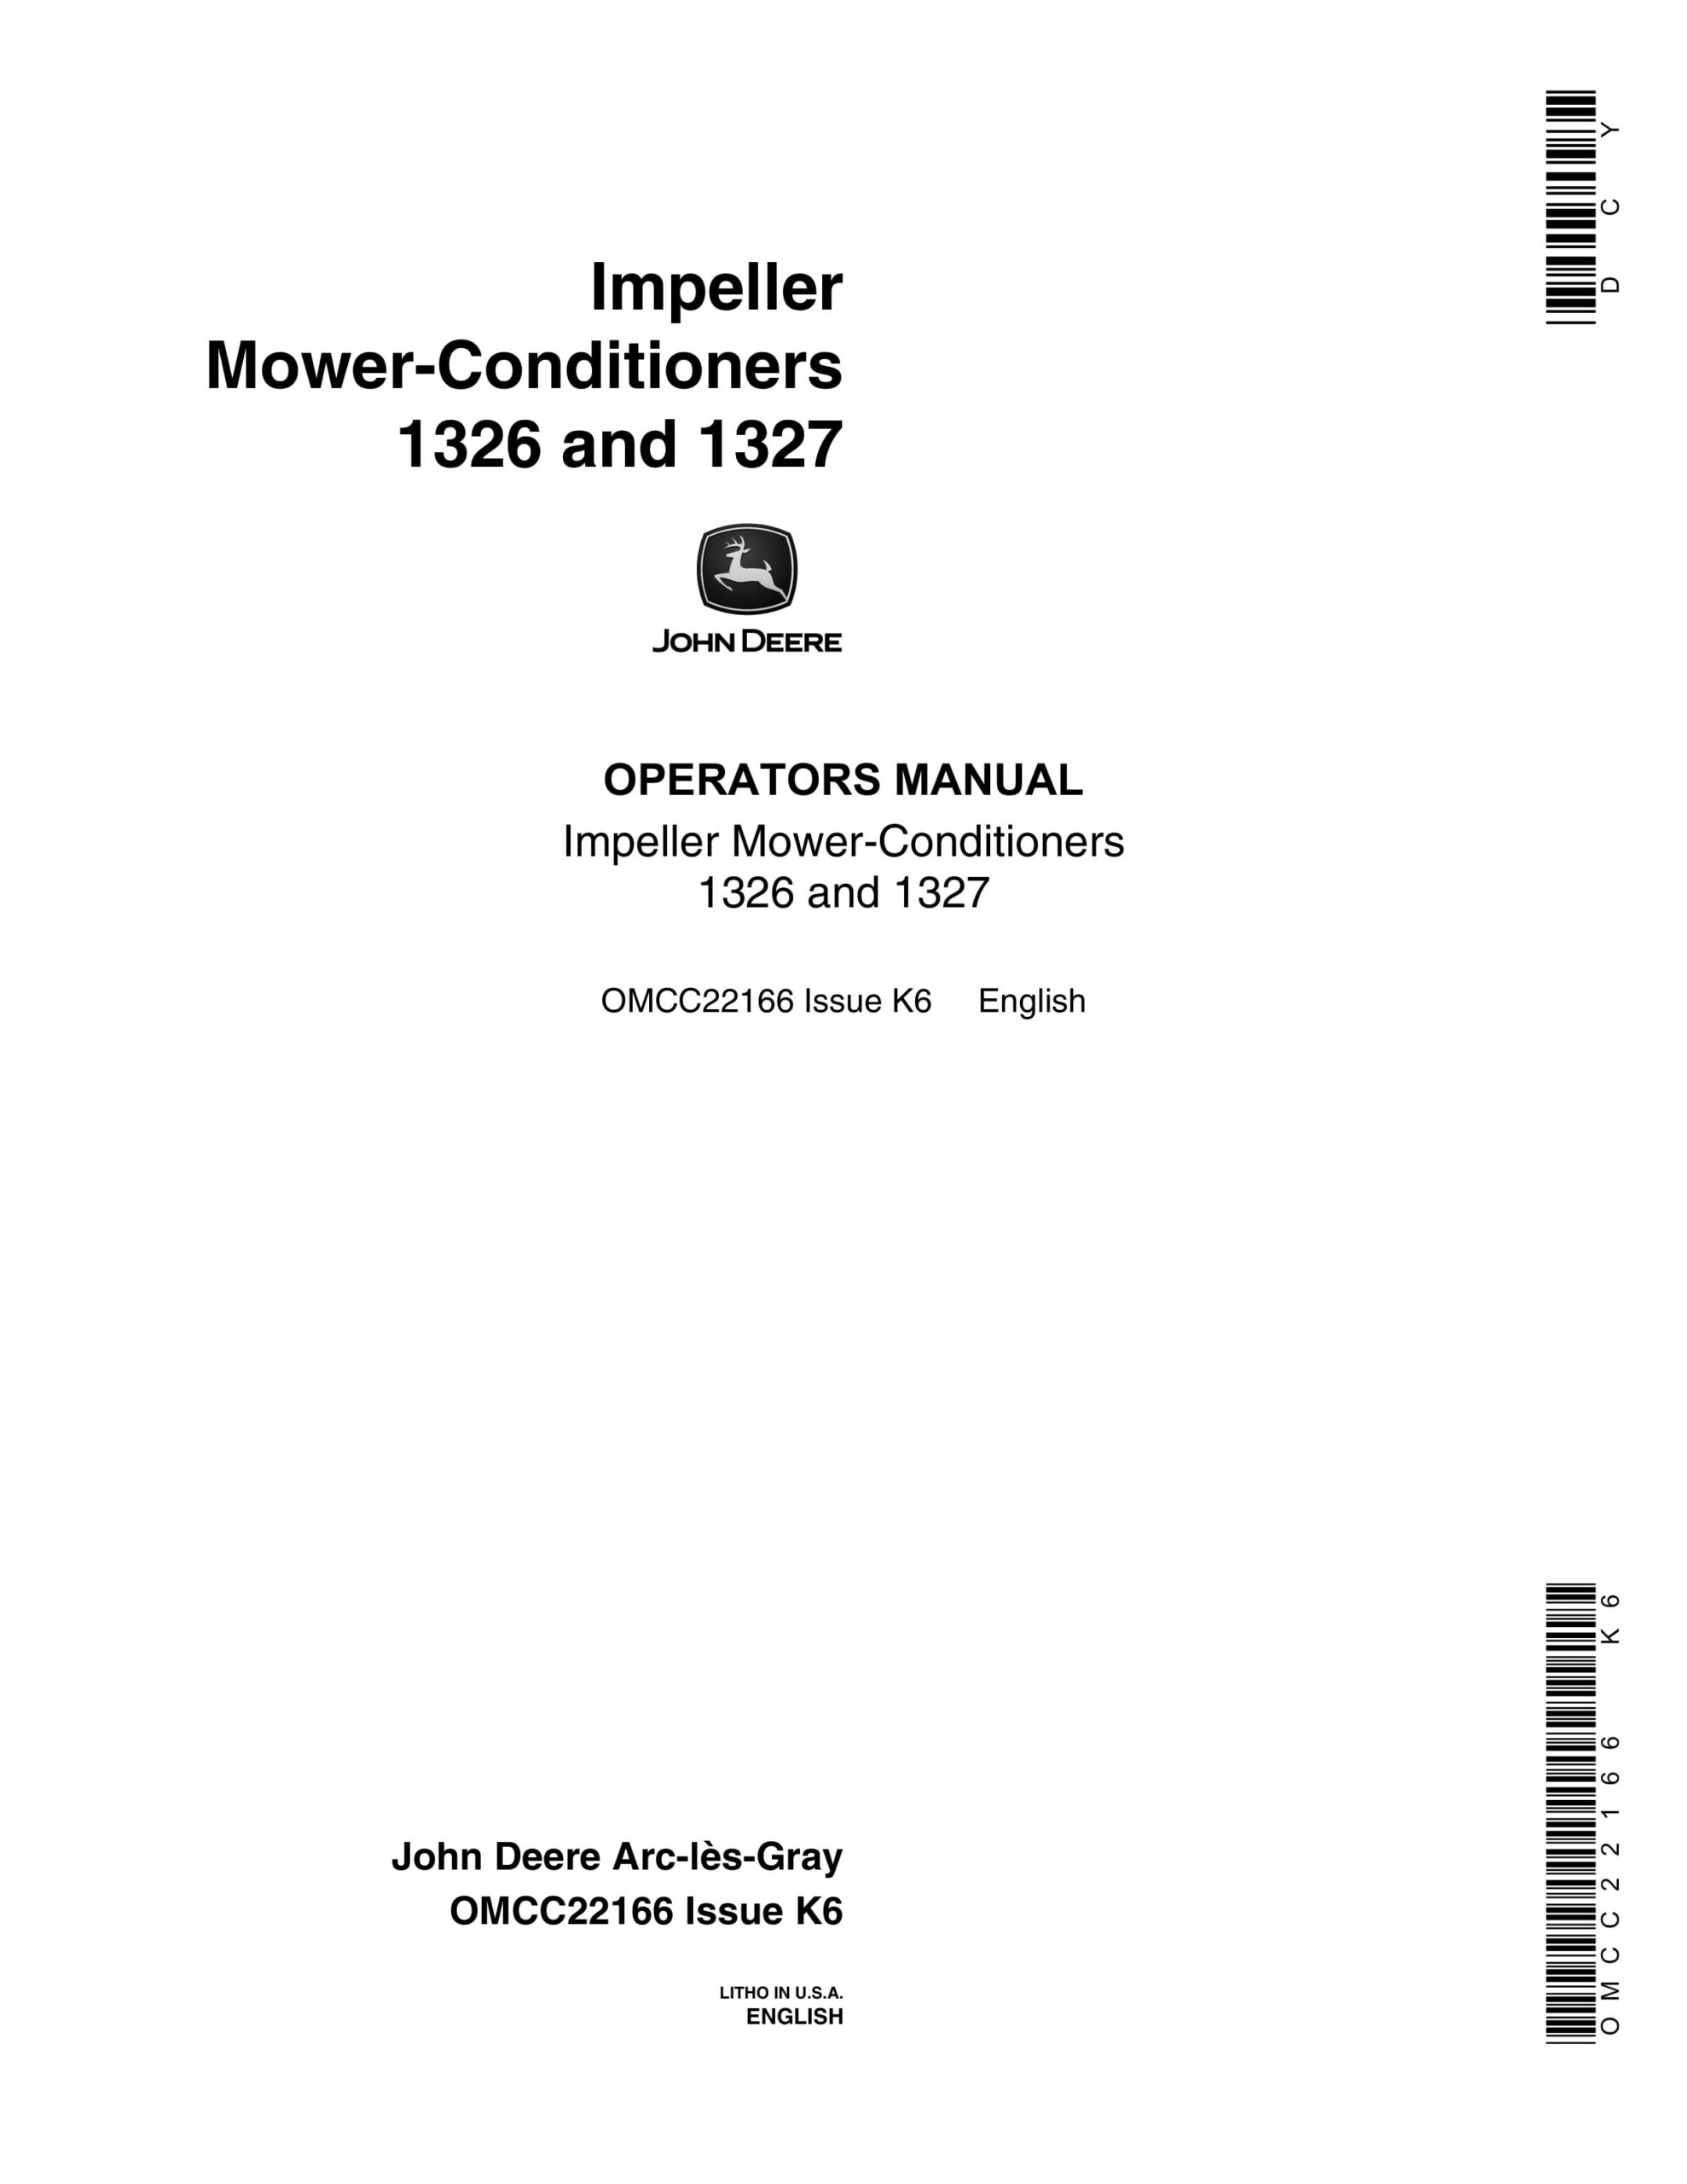 John Deere 1326 and 1327 Impeller Mower-Conditiones Operator Manual OMCC22166-1